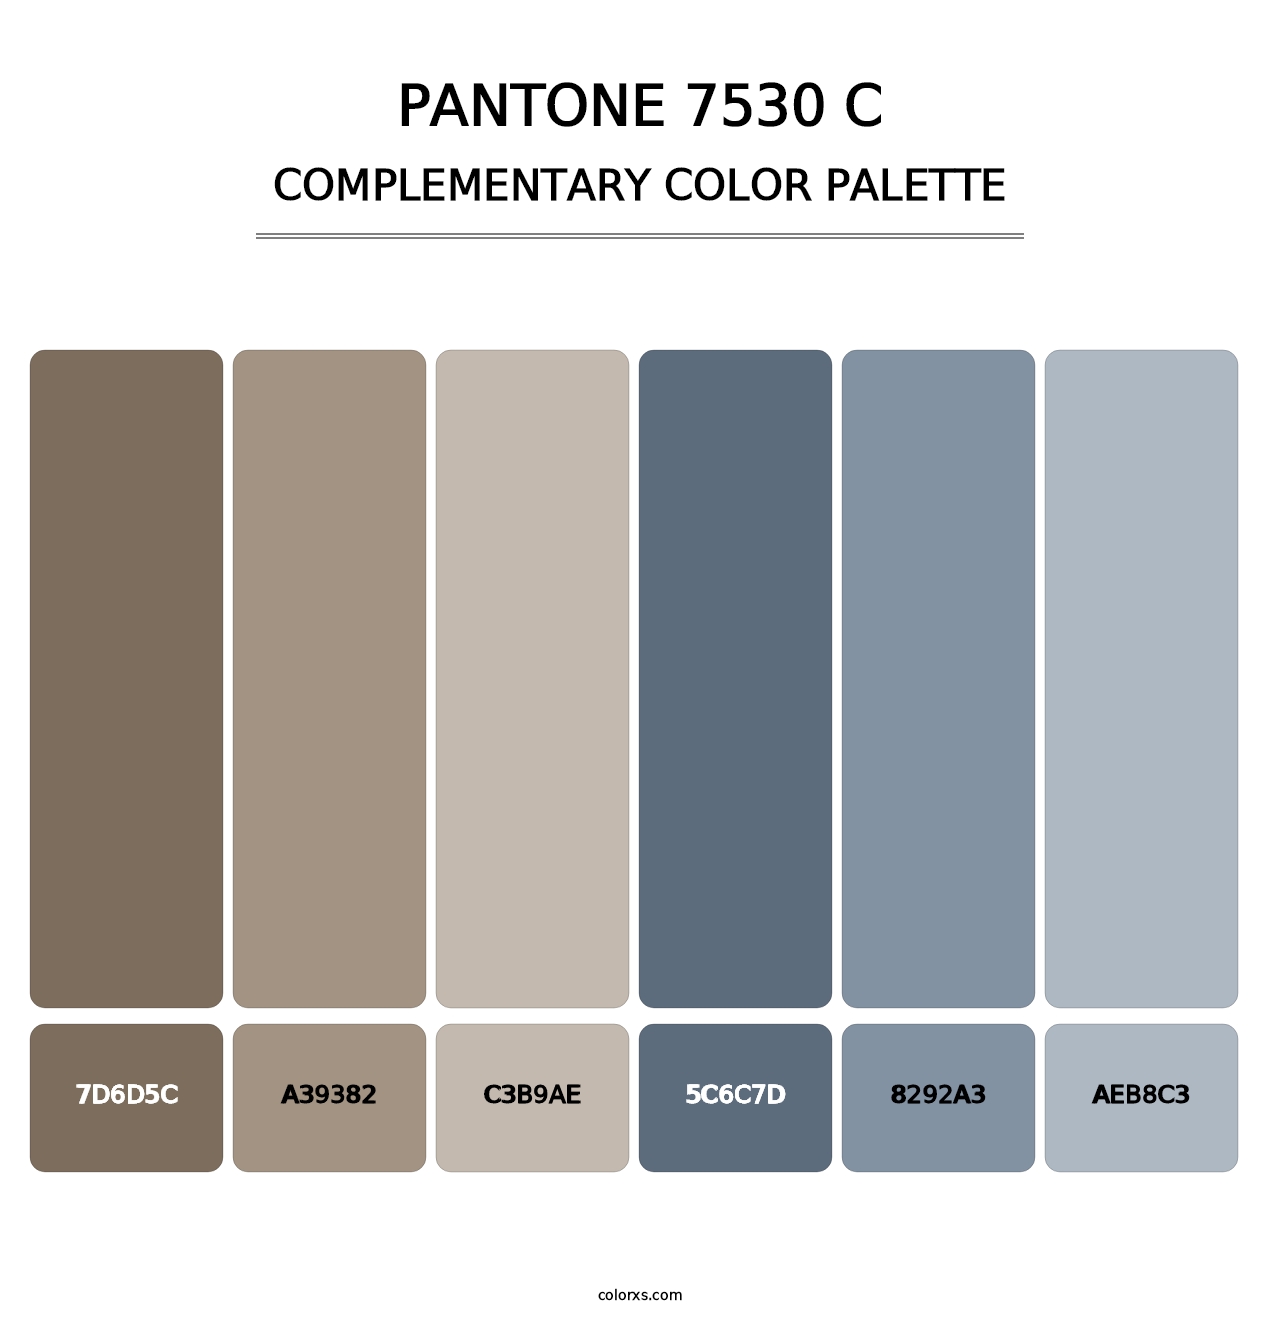 PANTONE 7530 C - Complementary Color Palette